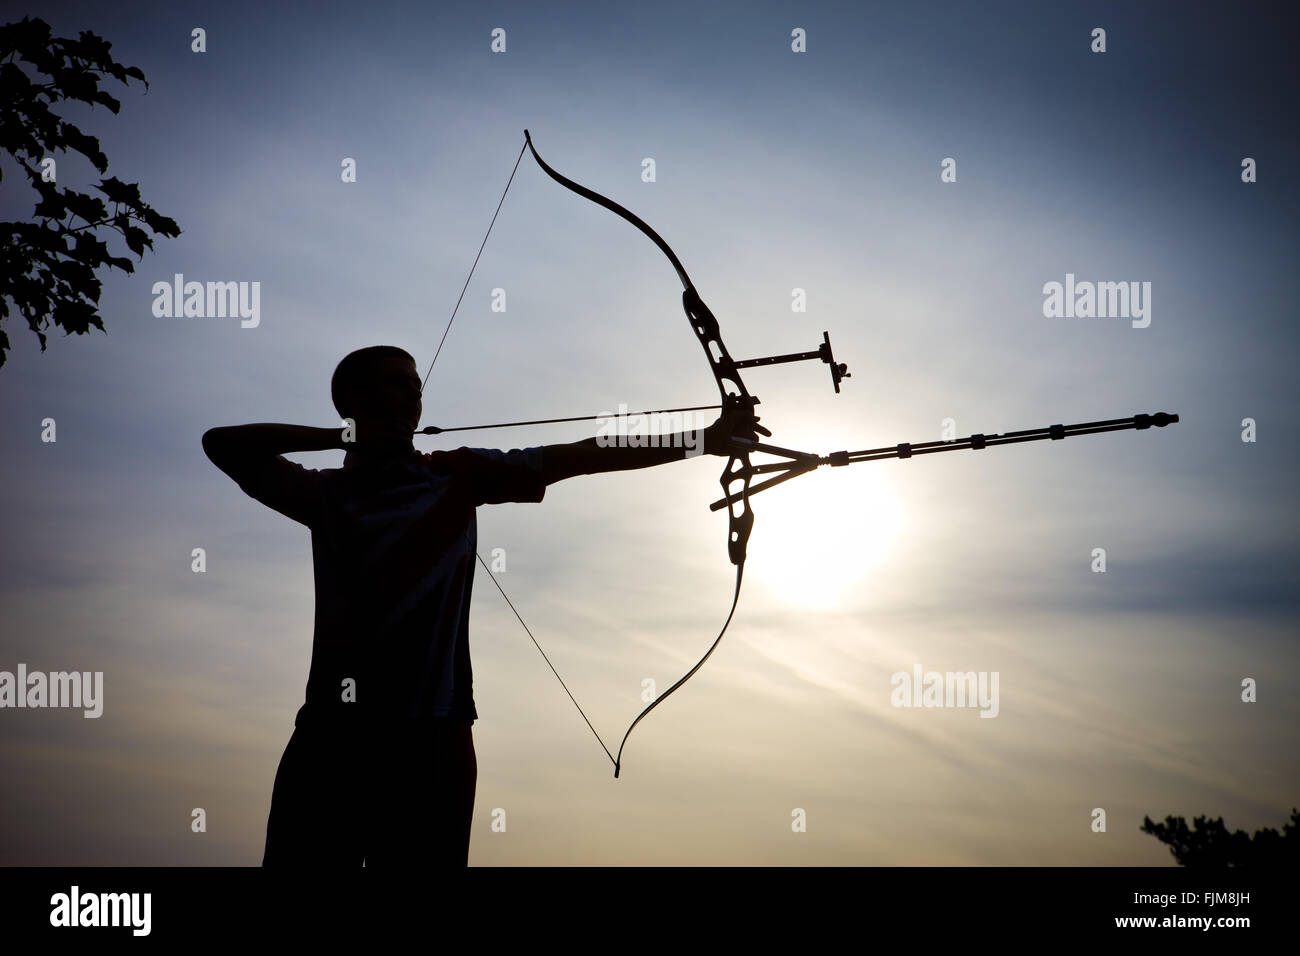 Imagen icónica de un arquero disparando una flecha con un arco, Foto de stock